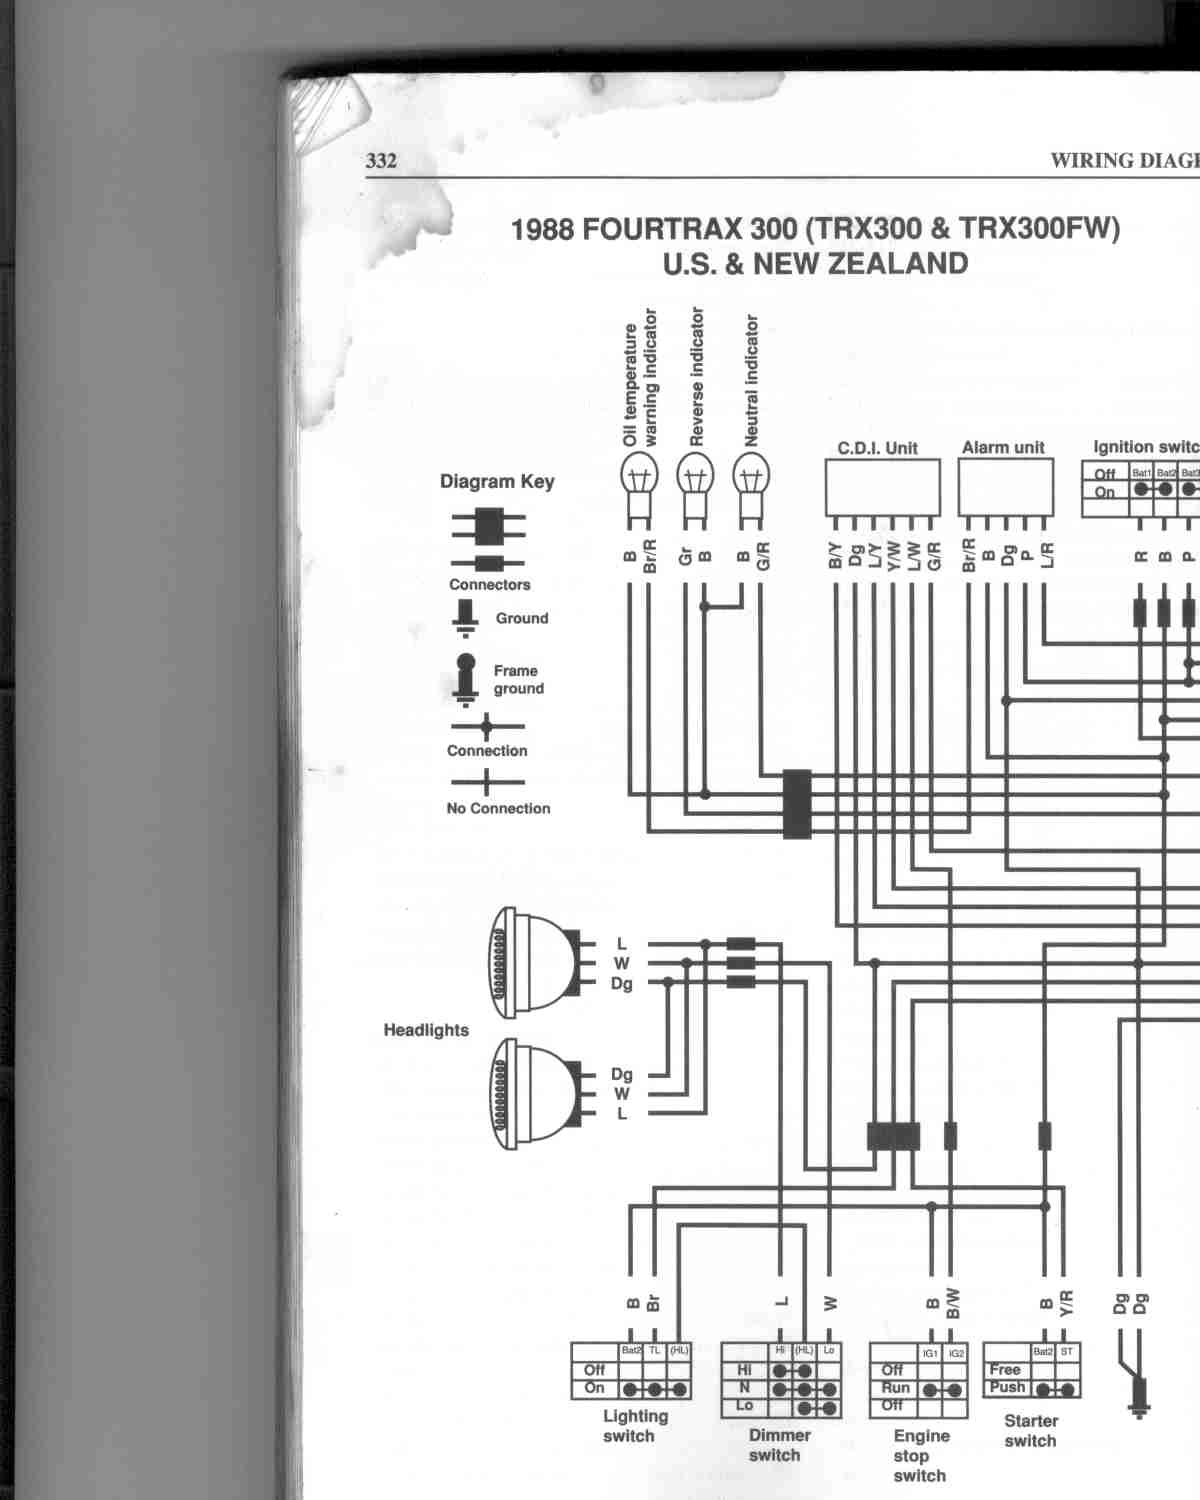 trx300 wiring diagram needed - ATVConnection.com ATV Enthusiast Community  Honda Atv Solenoid Wiring Diagram    ATV Connection